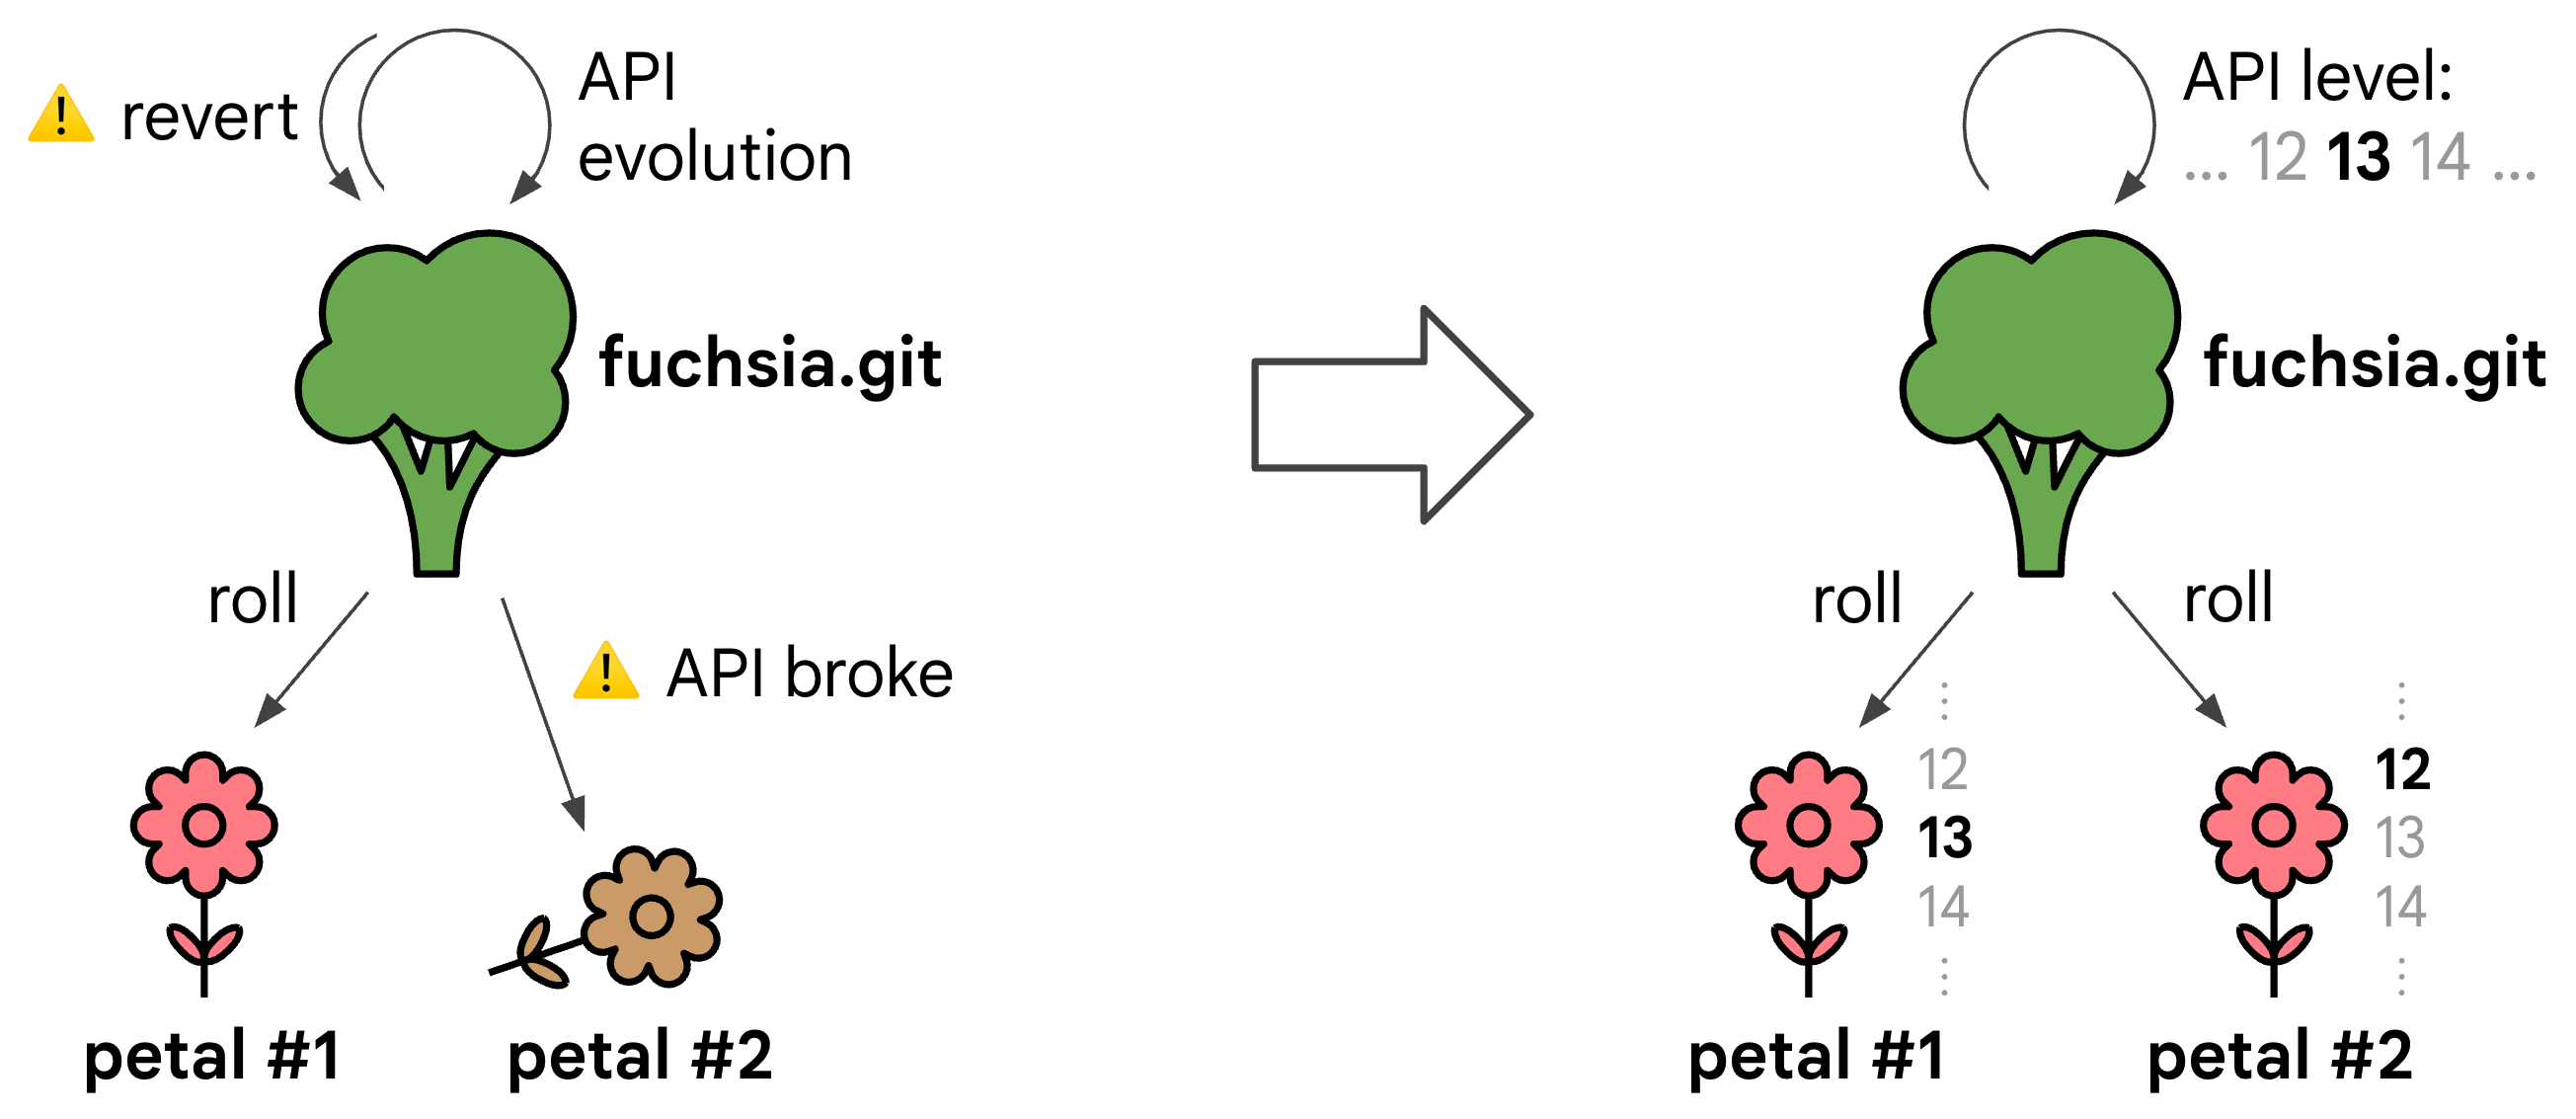 API evolution diagram with text description above